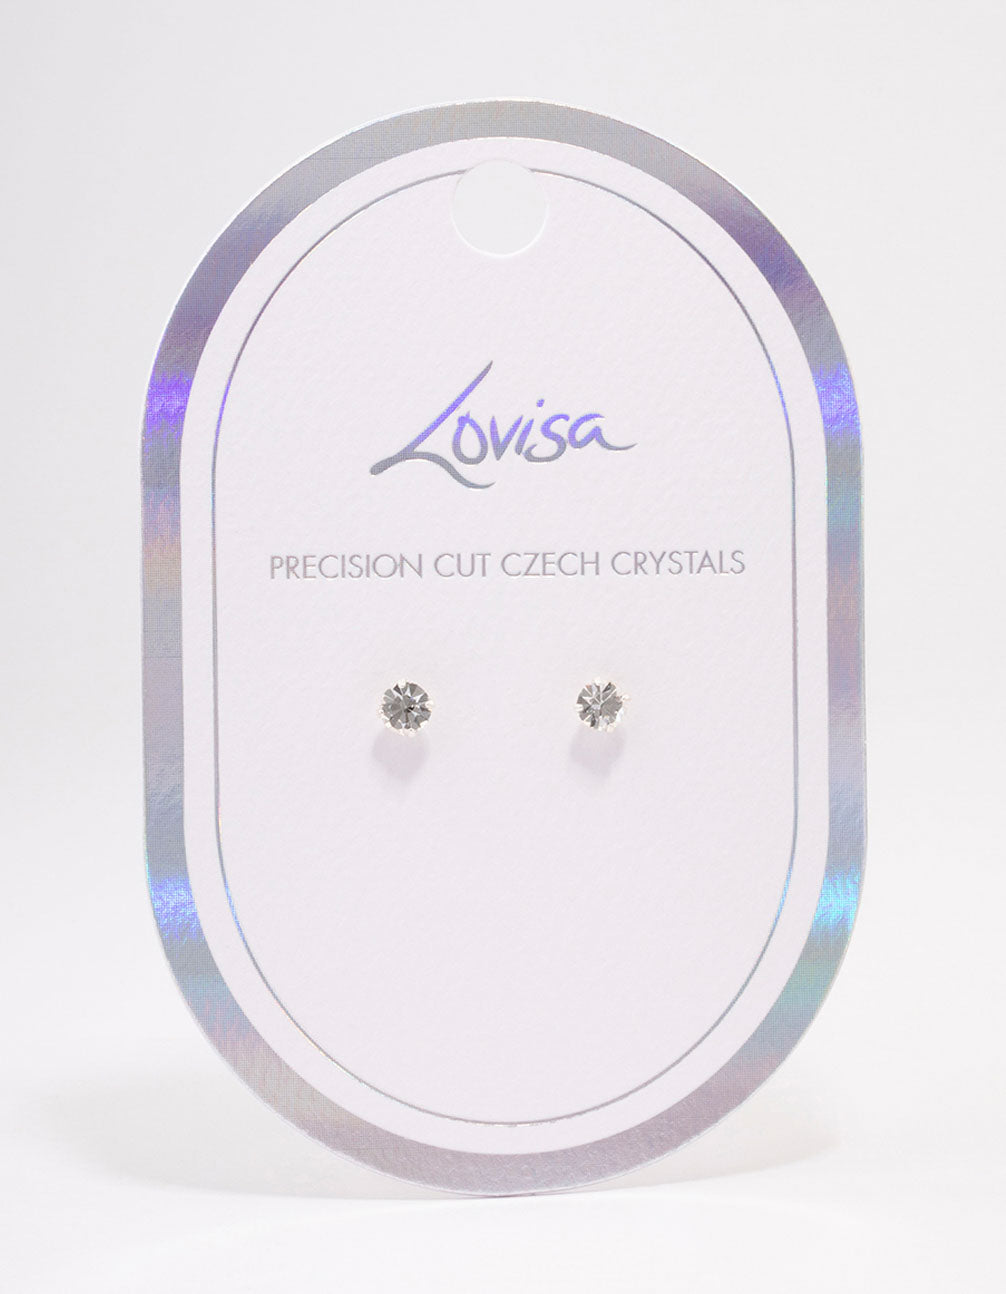 Lovisa Pearl earrings - cream pearls with slight... - Depop